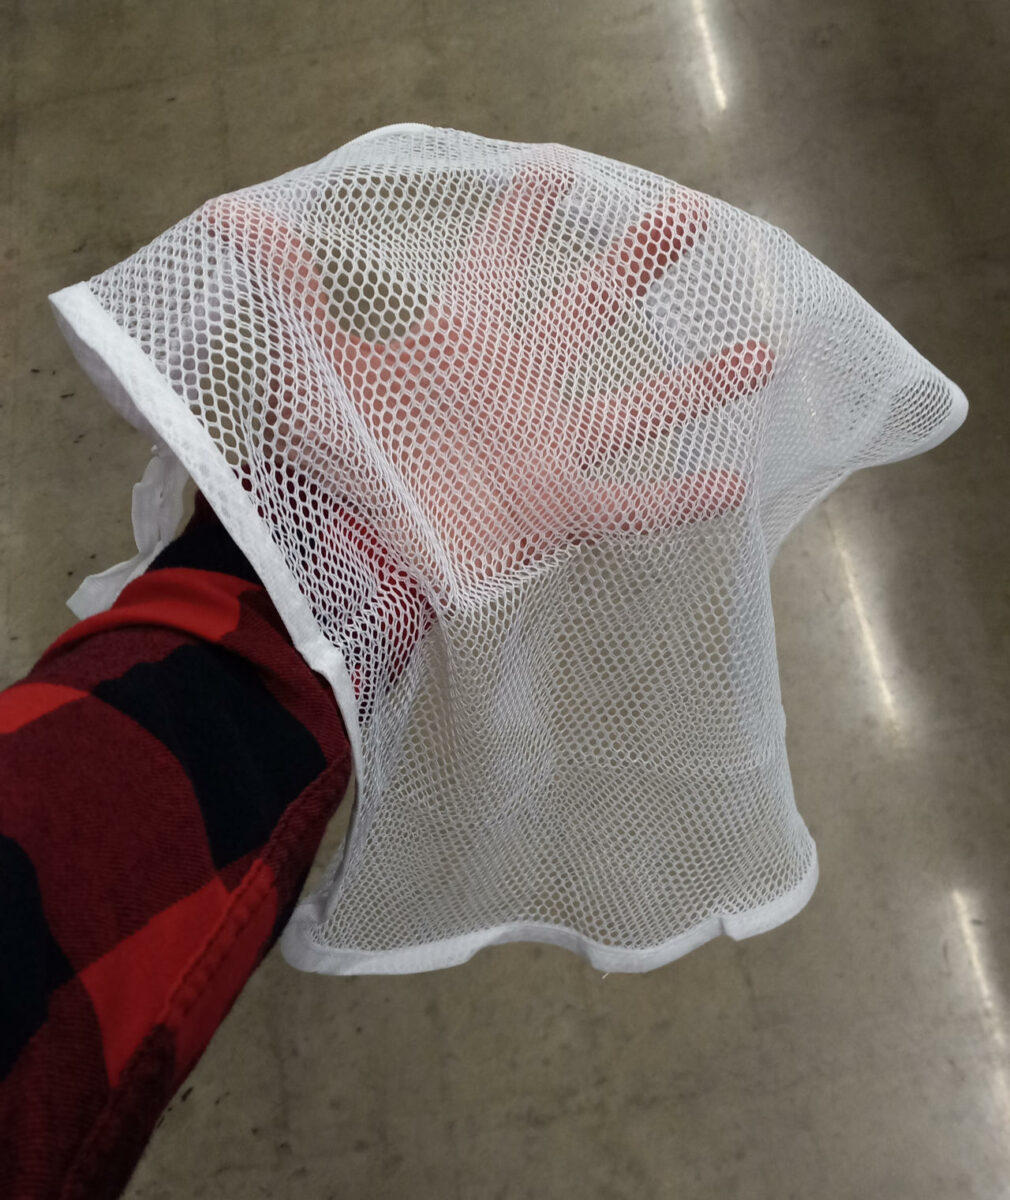 Helmet lining washing machine mesh bag